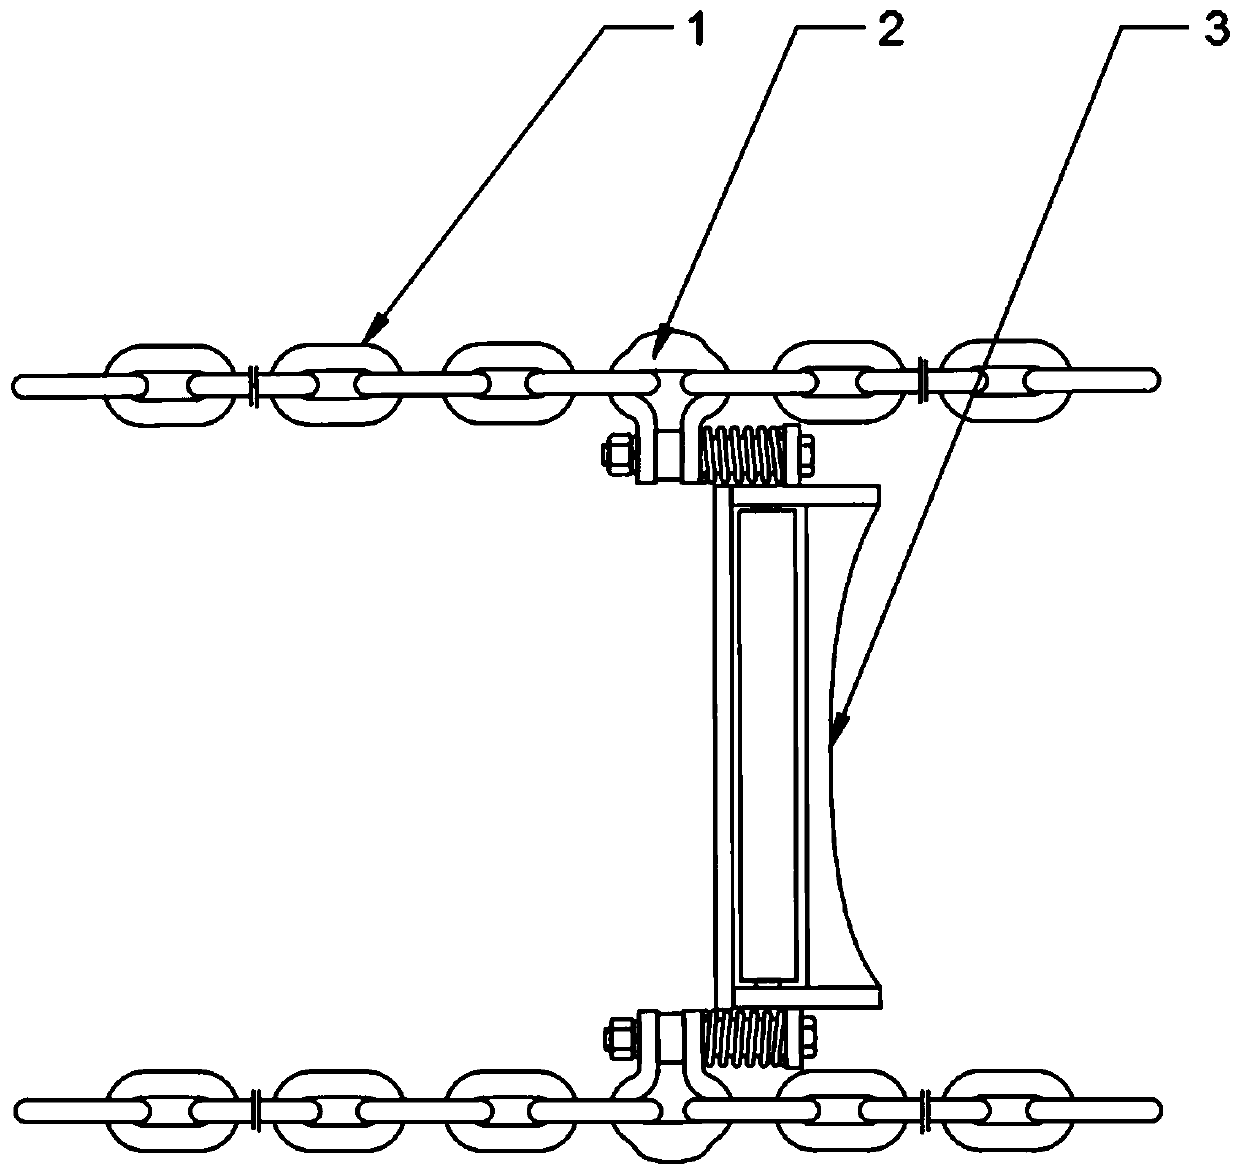 Side double-chain scraper blade for mining scraper conveyer